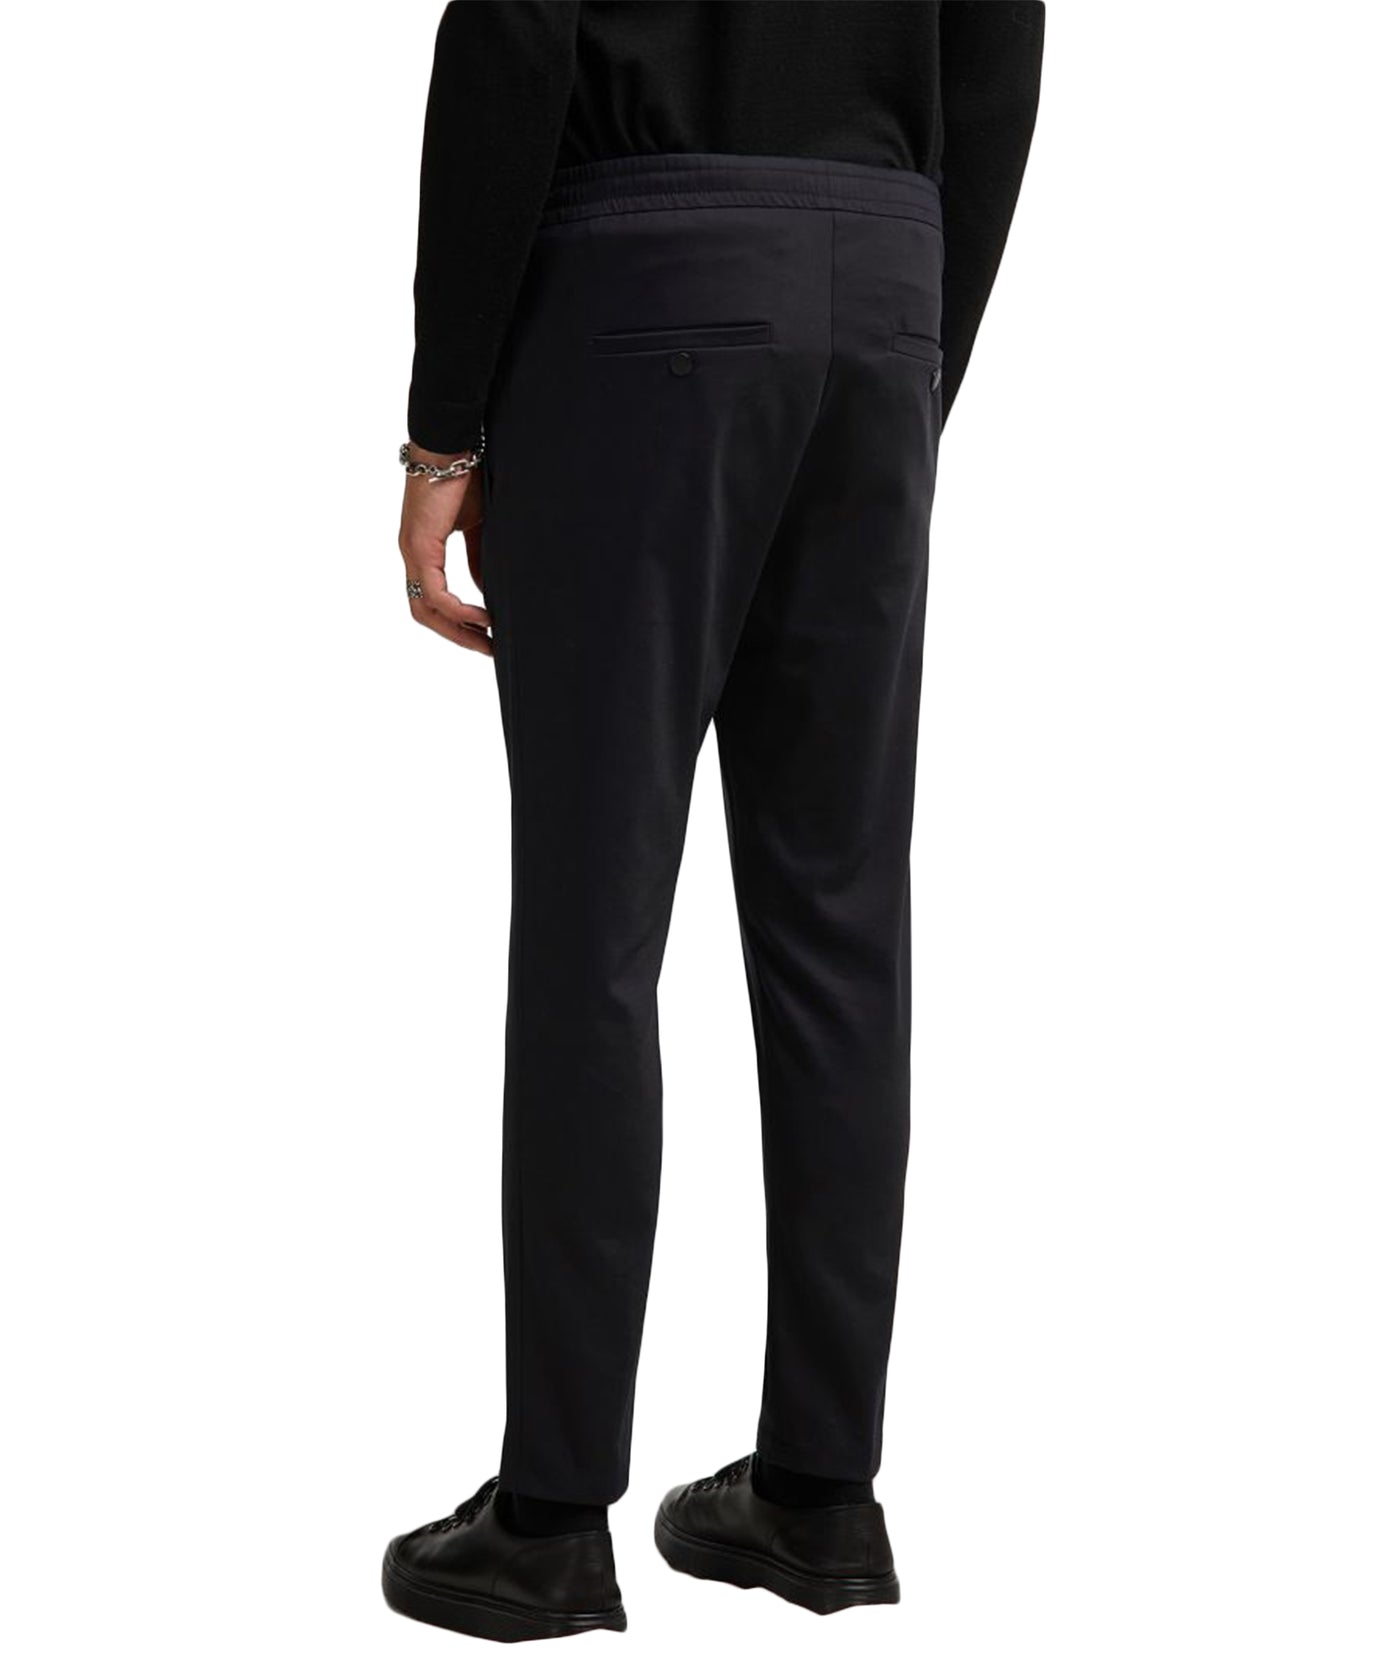 Zwarte sportieve casual pantalon jeger van Drykorn met koord